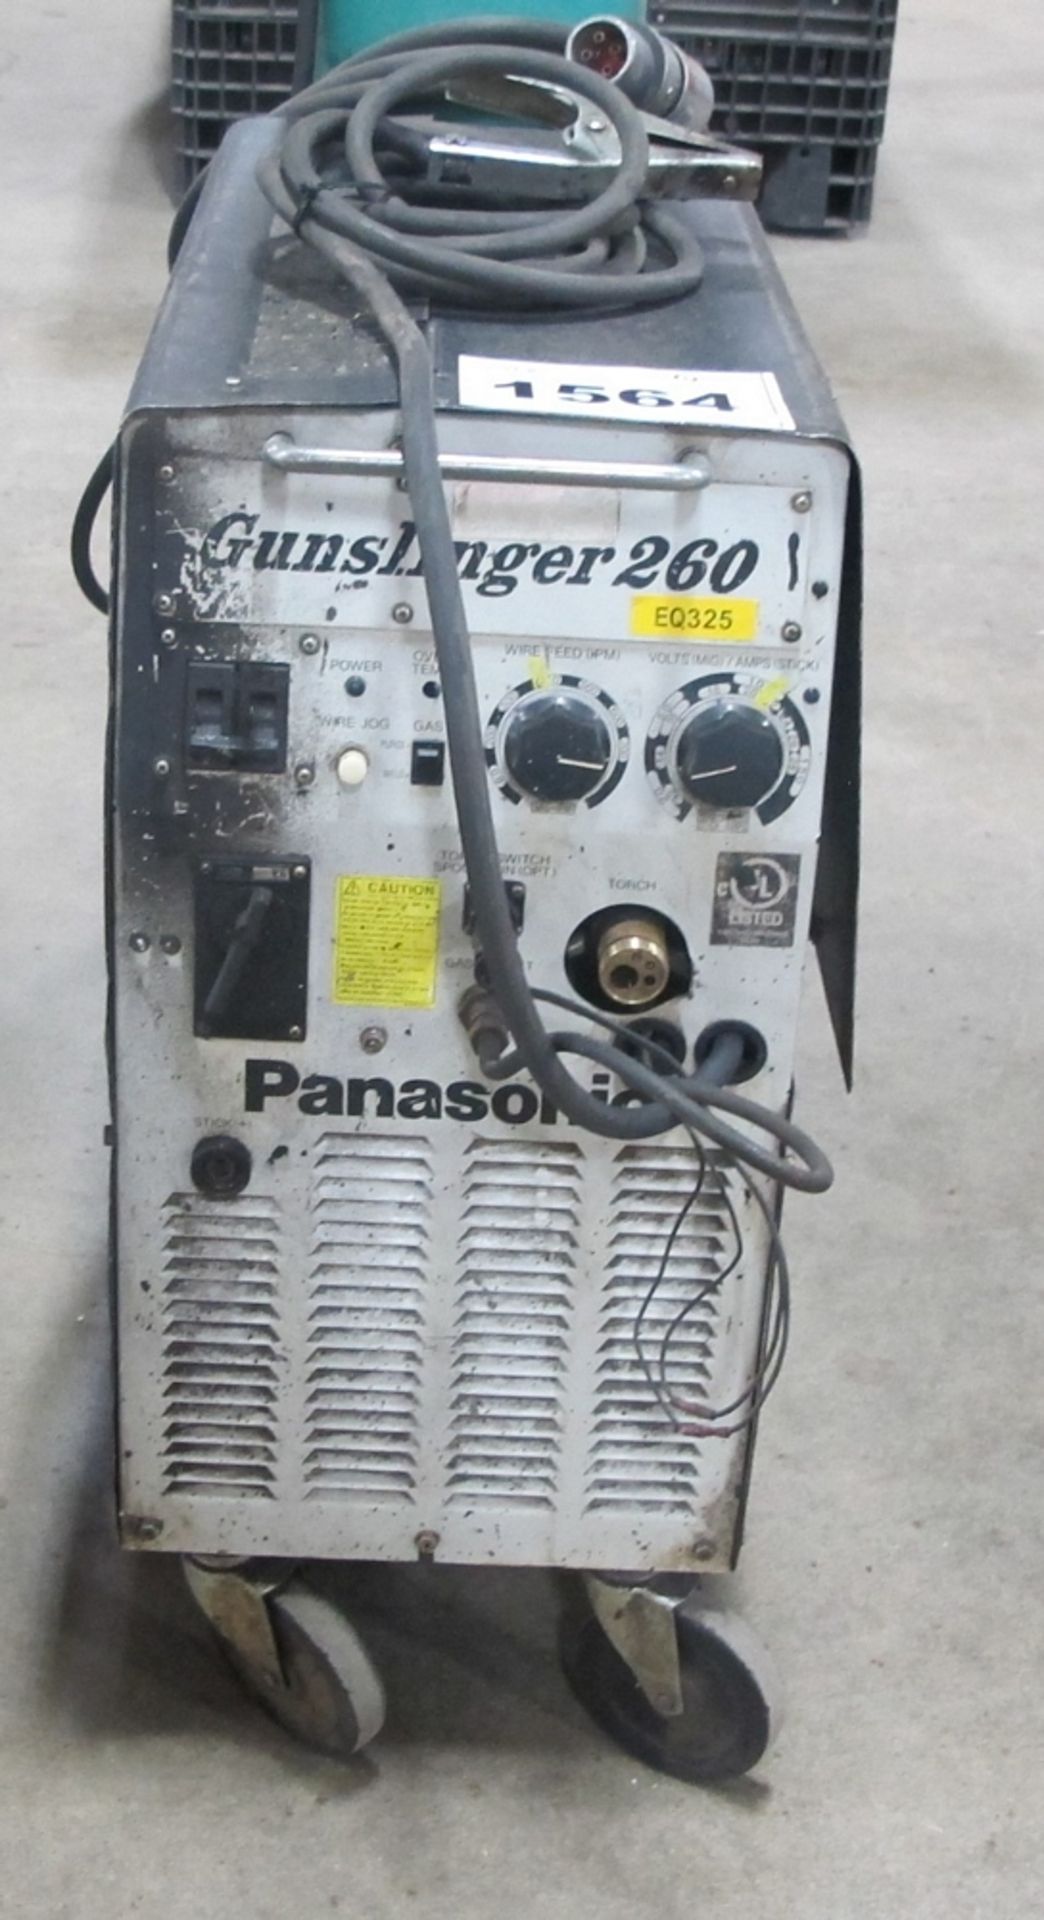 PANASONIC GUNSLINGER 260 MIG WELDER, S/N 19992995, NO TANK (100 SHIRLEY AVE KITCHENER)